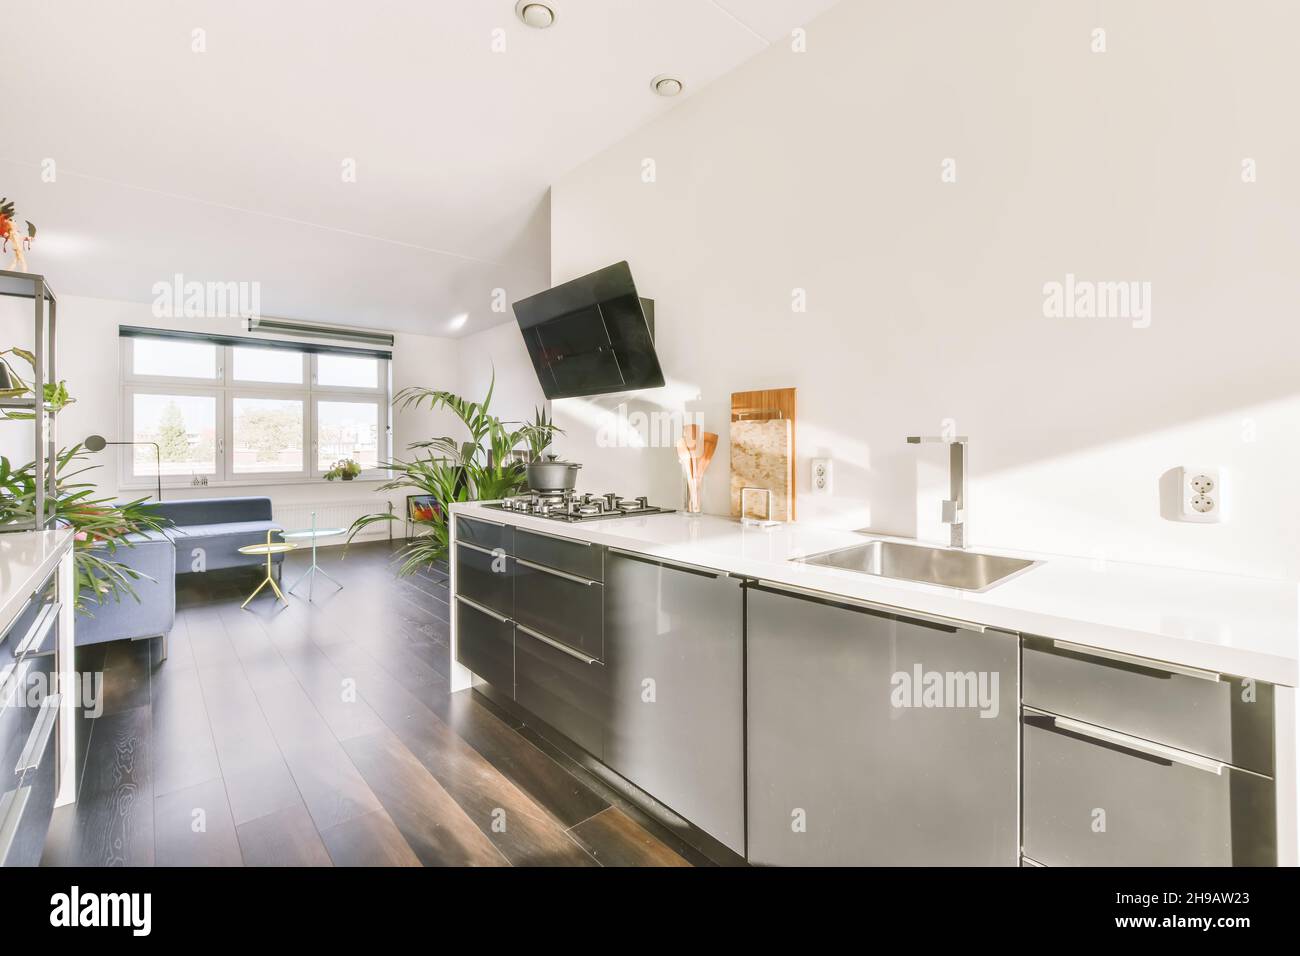 Attractive kitchen with stylish and modern black range hood Stock Photo